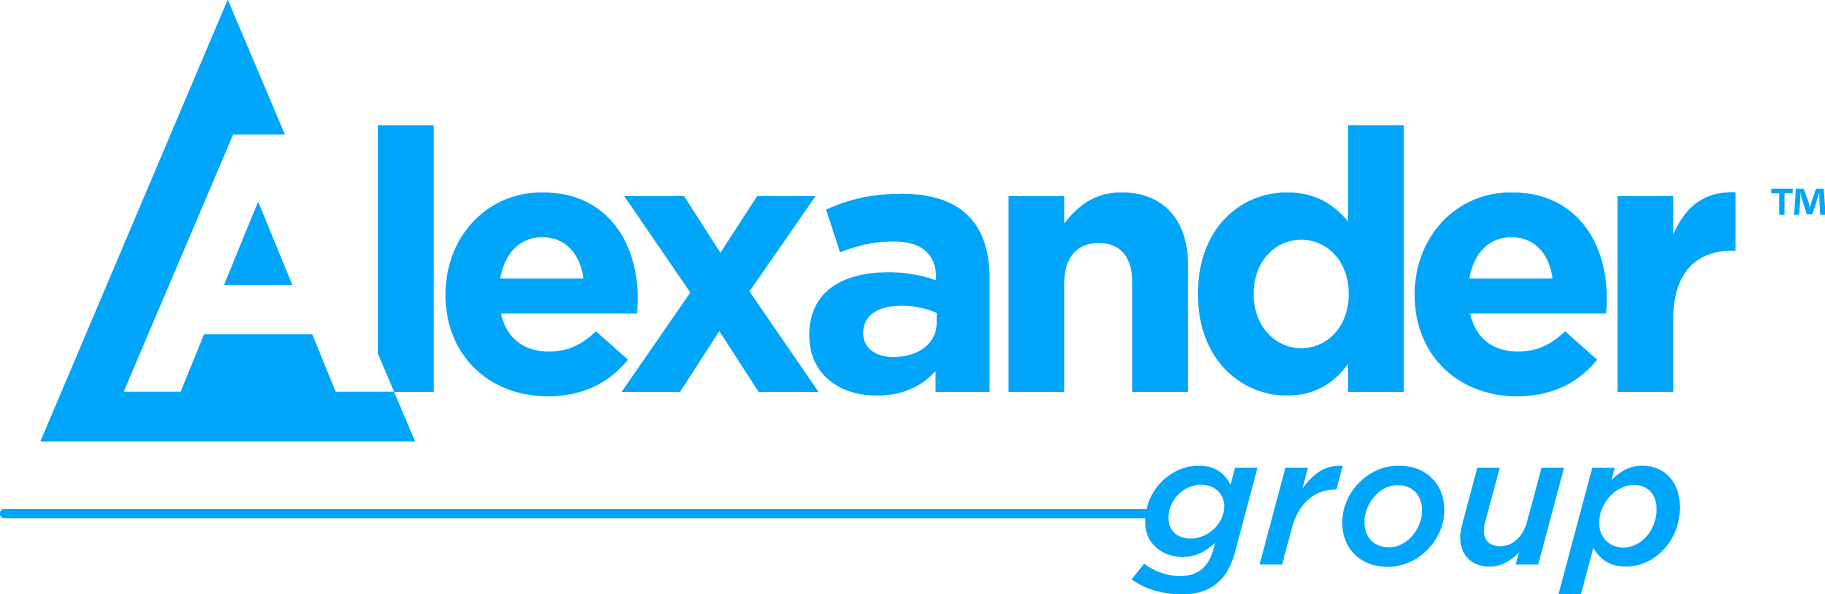 Alexander Group logo image